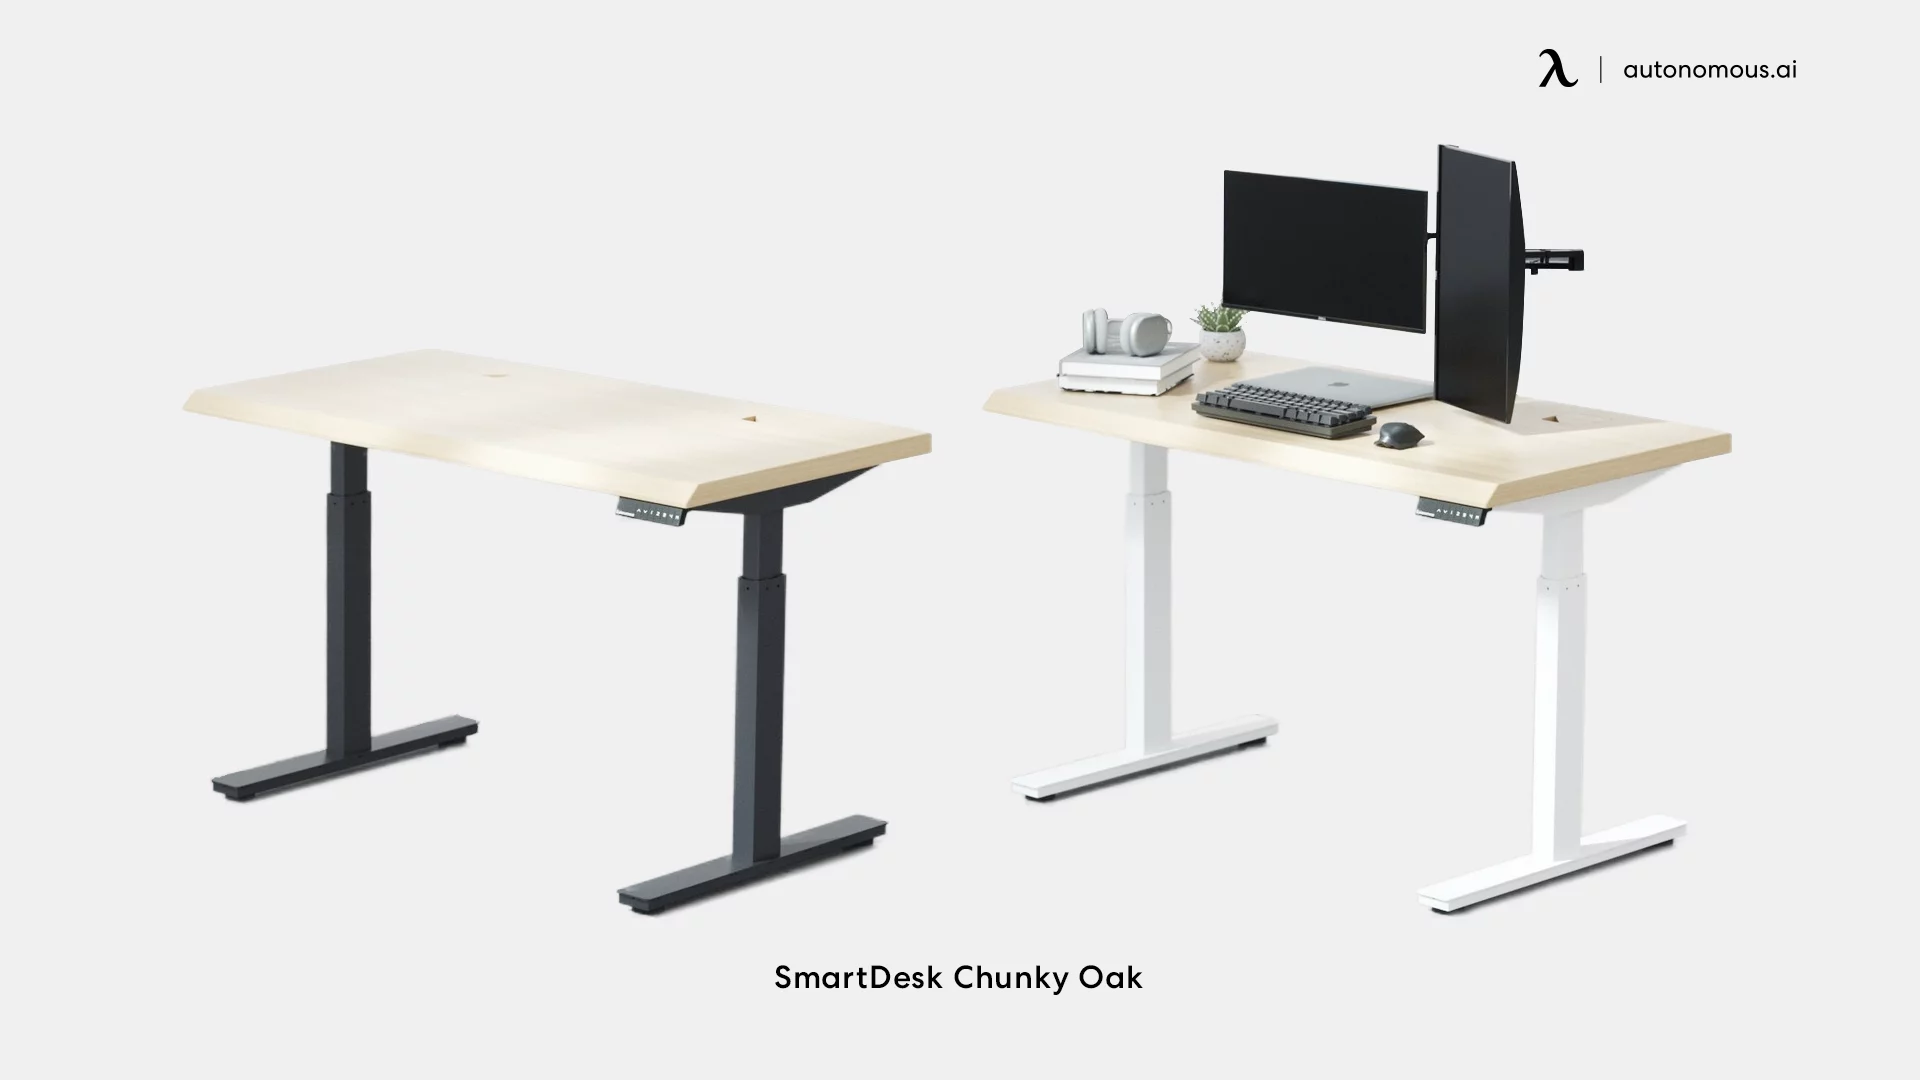 SmartDesk Chunky Oak adjustable computer desk